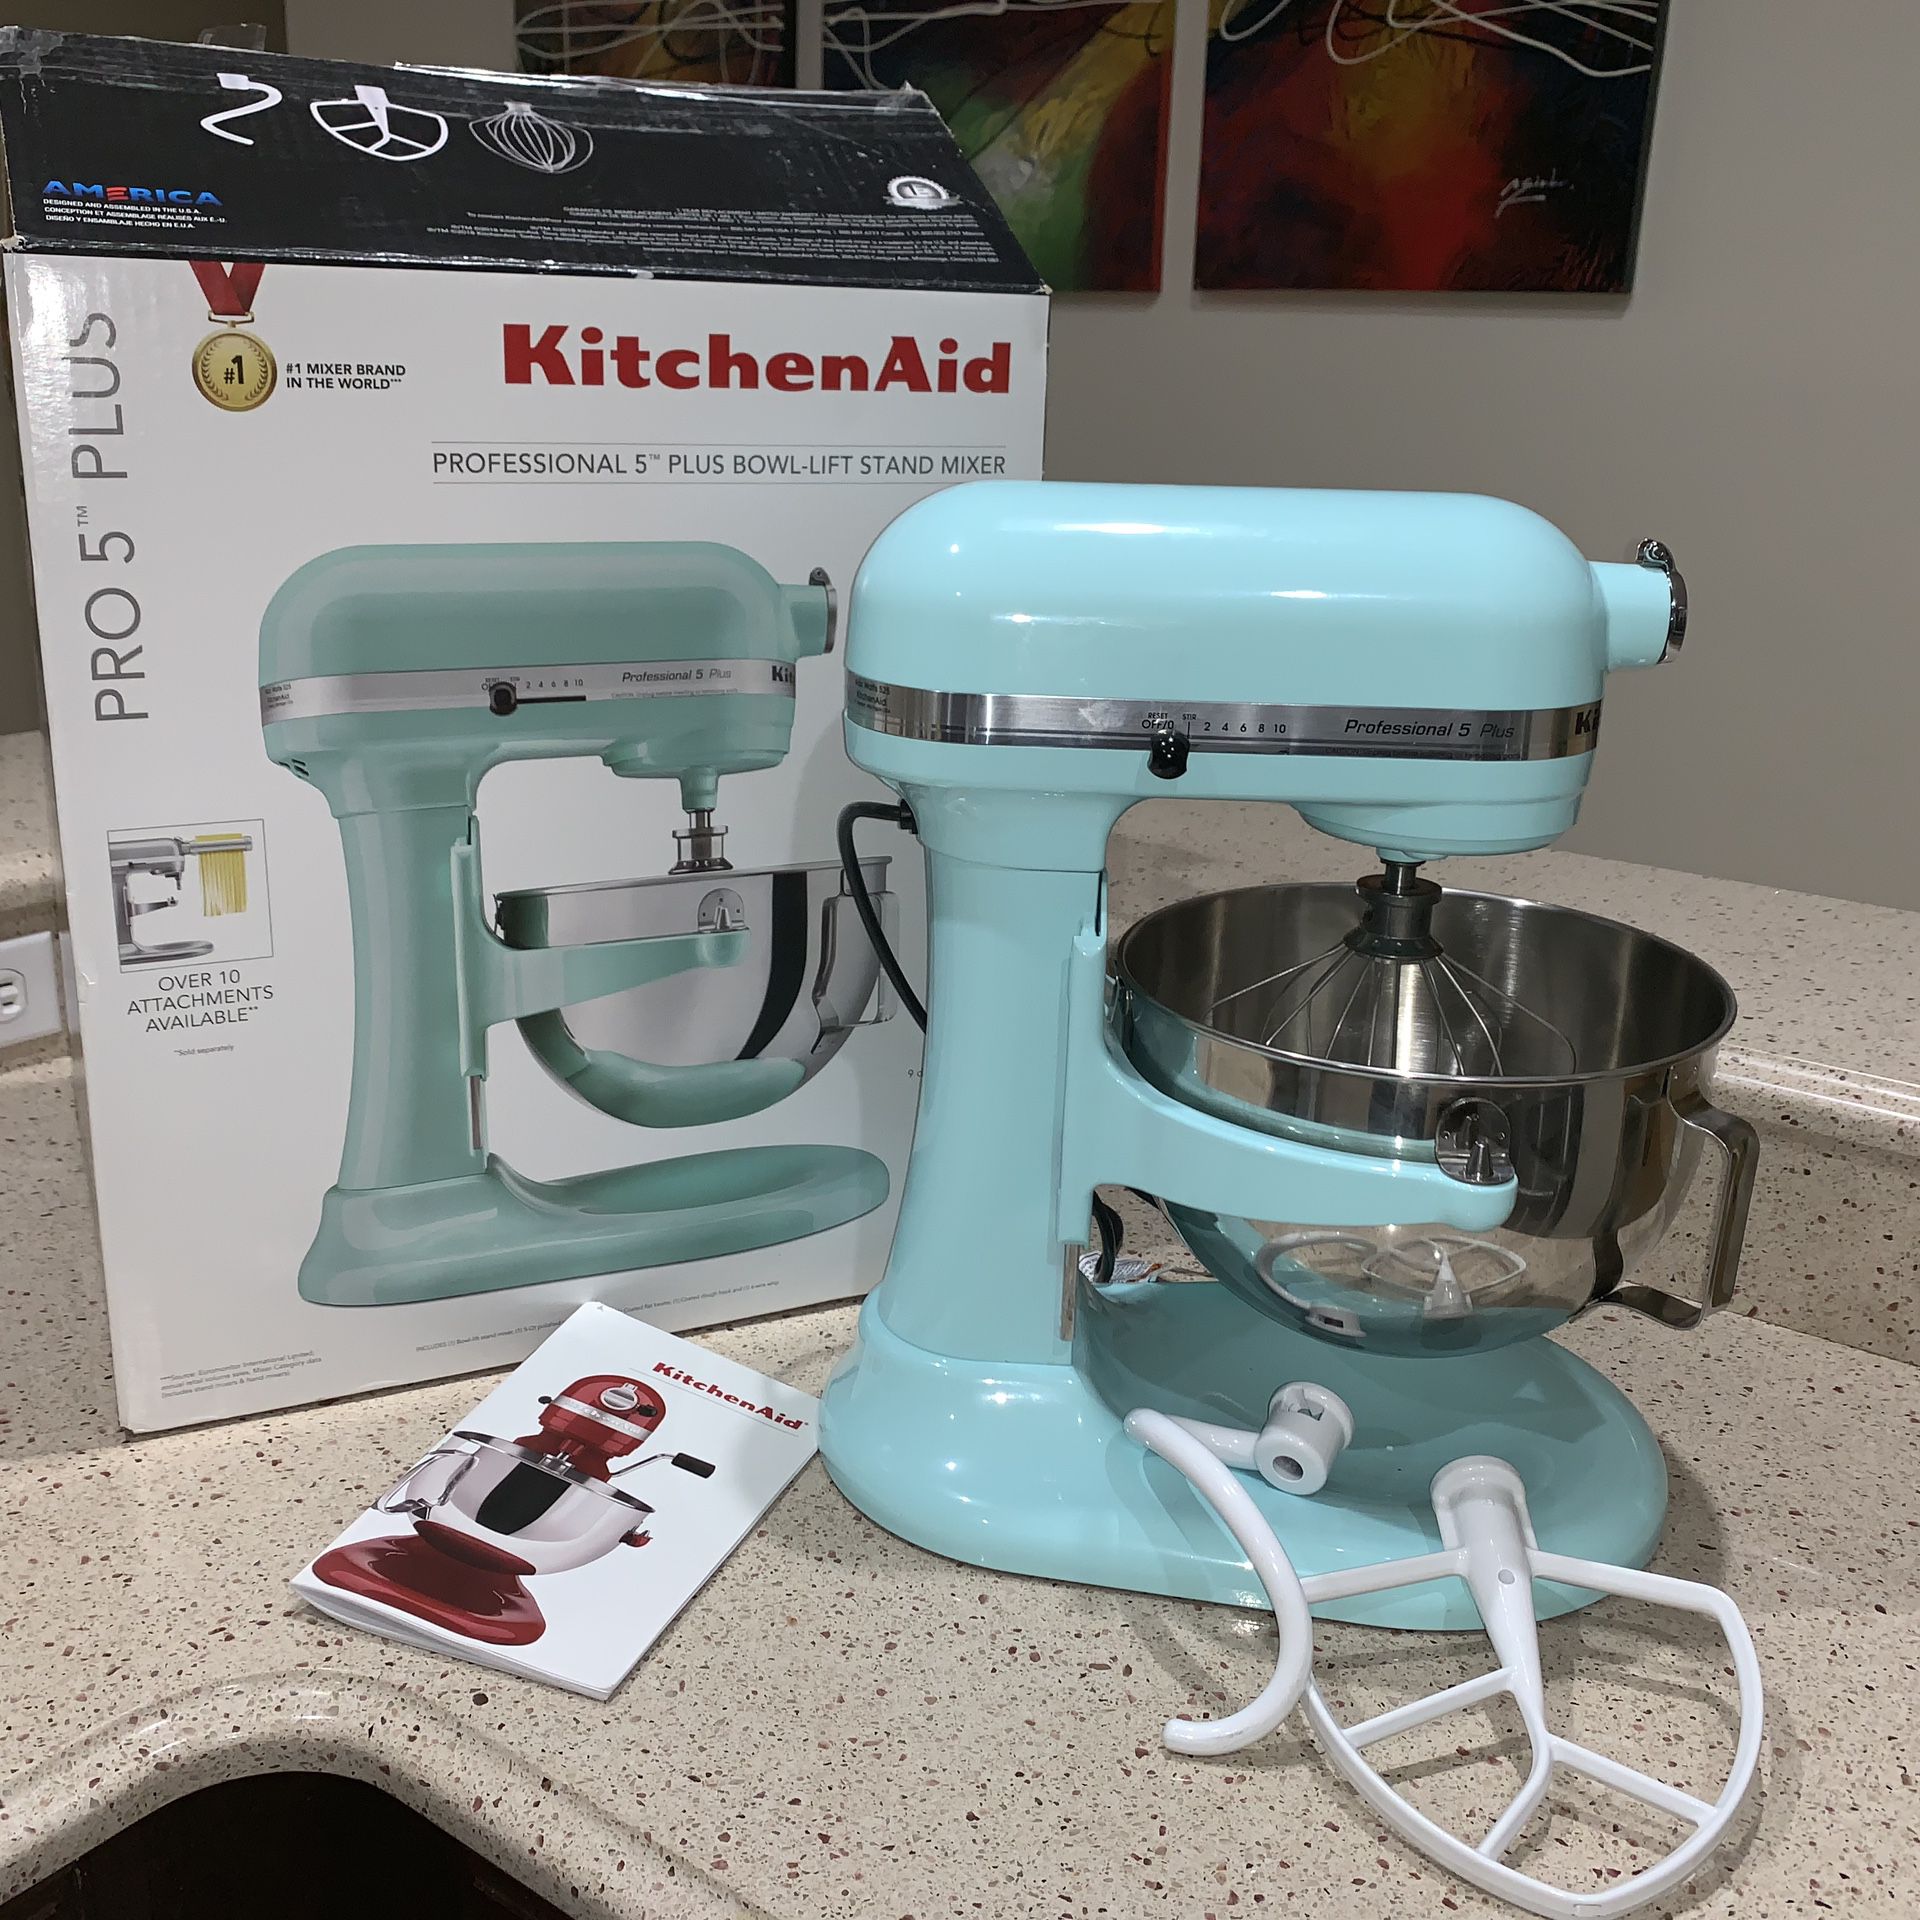 KitchenAid Professional 5 Plus KV25G0X Mixer Review - Consumer Reports